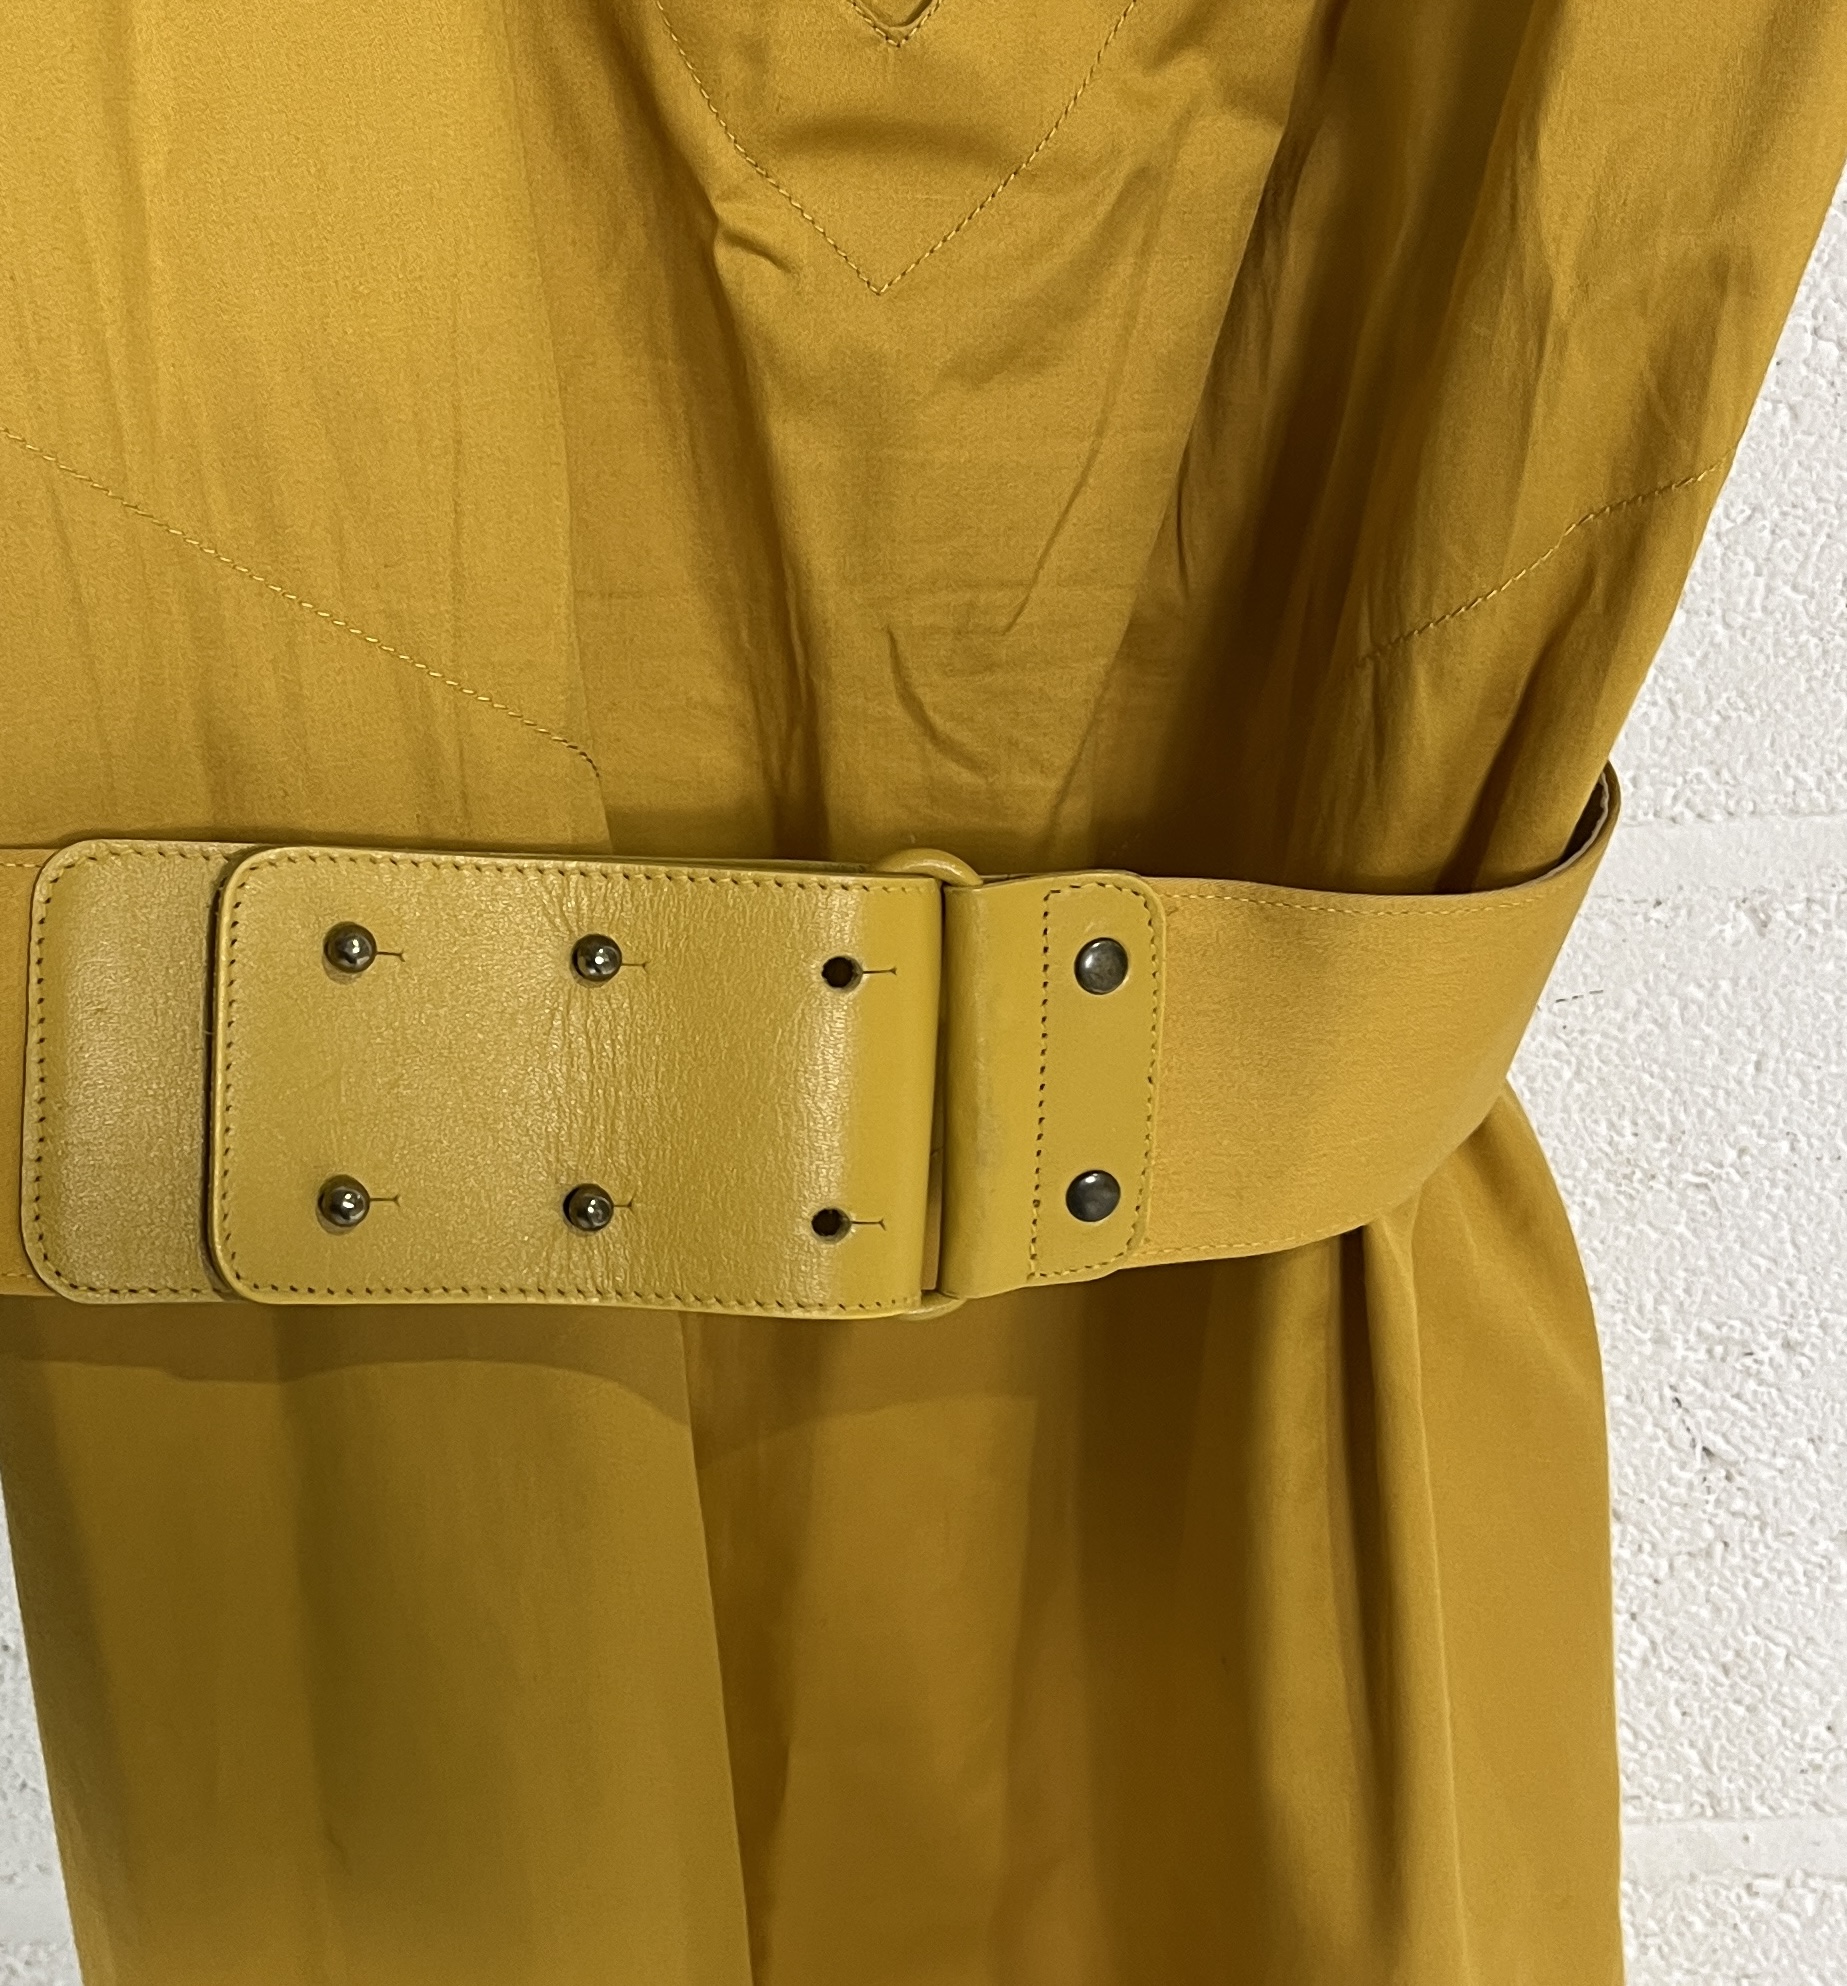 A vintage Louis Feraud yellow Kaftan dress and belt UK size 12 - Image 4 of 5